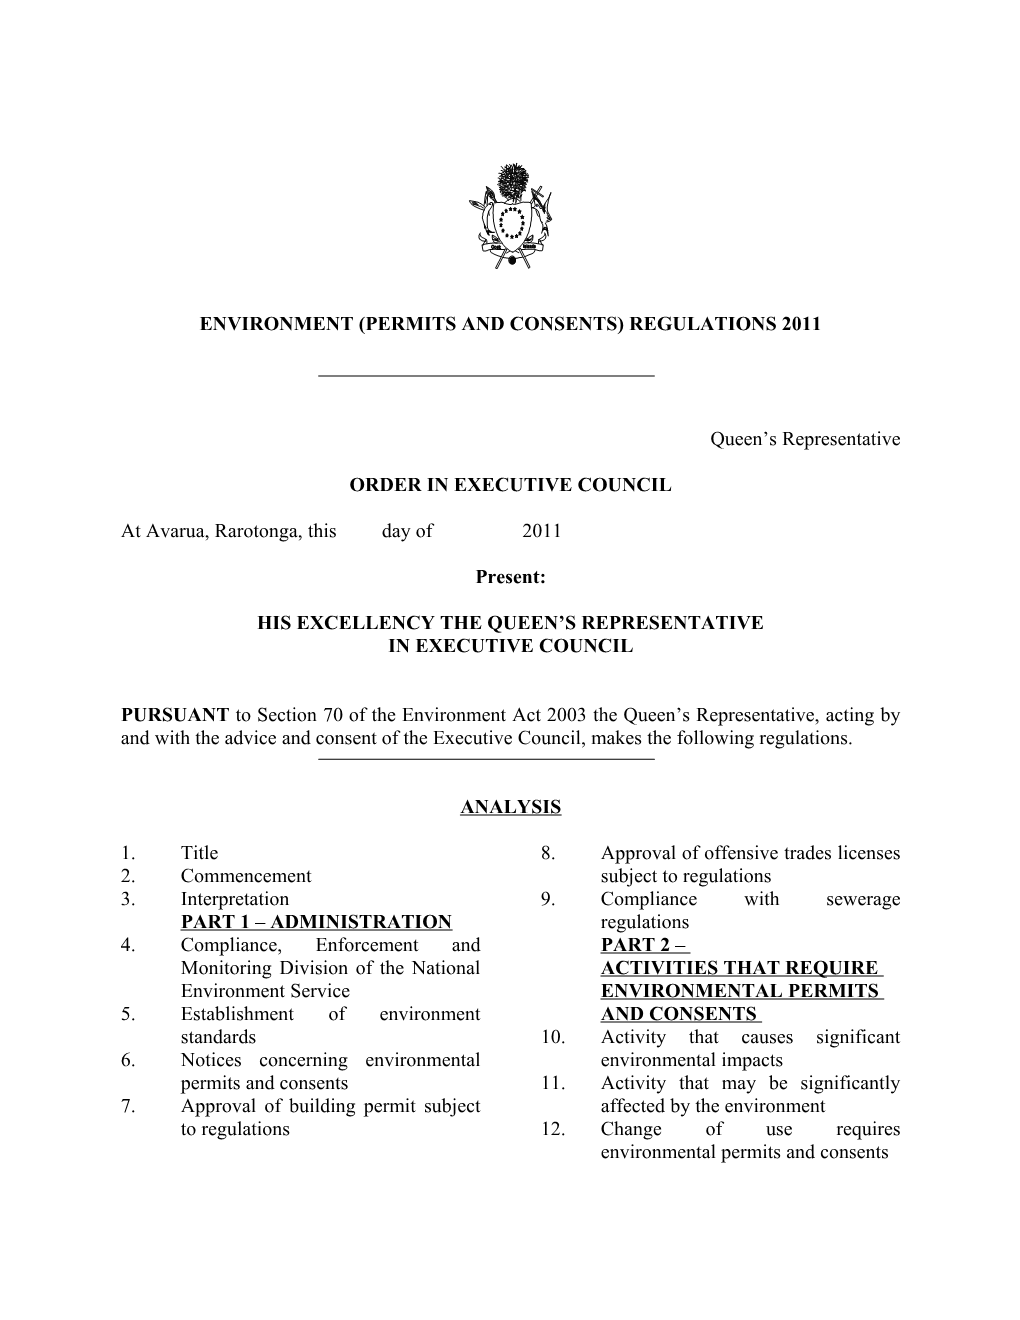 Environment Act (Environmental Significance Declaration) Regulations 2005